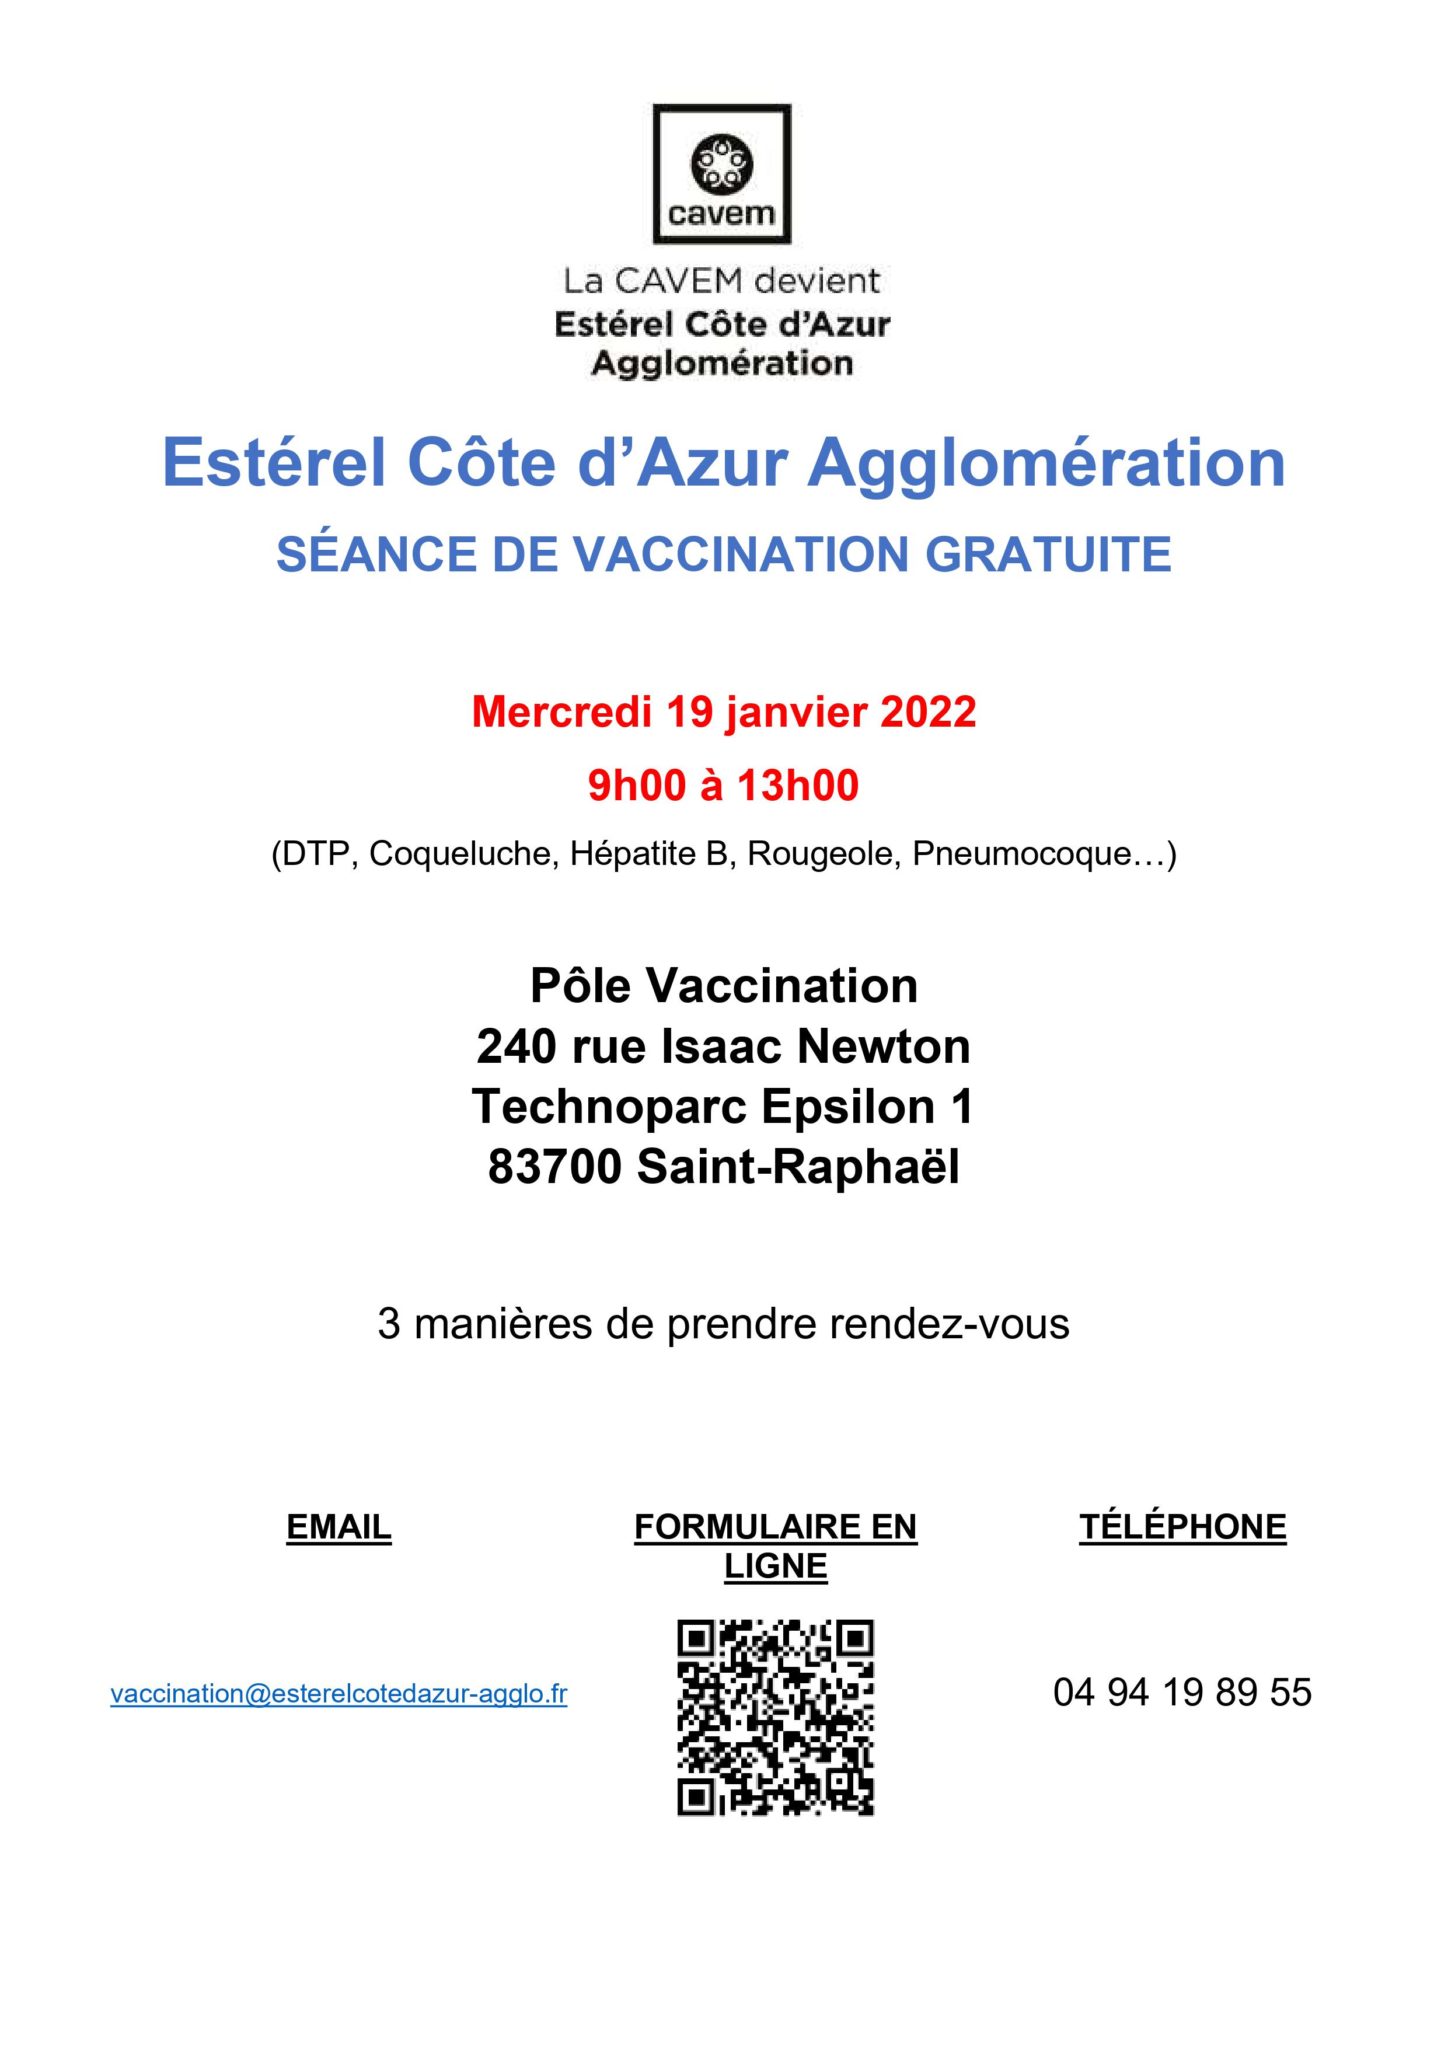 19/01/22 : Vaccination gratuite (DTP, Coqueluche)